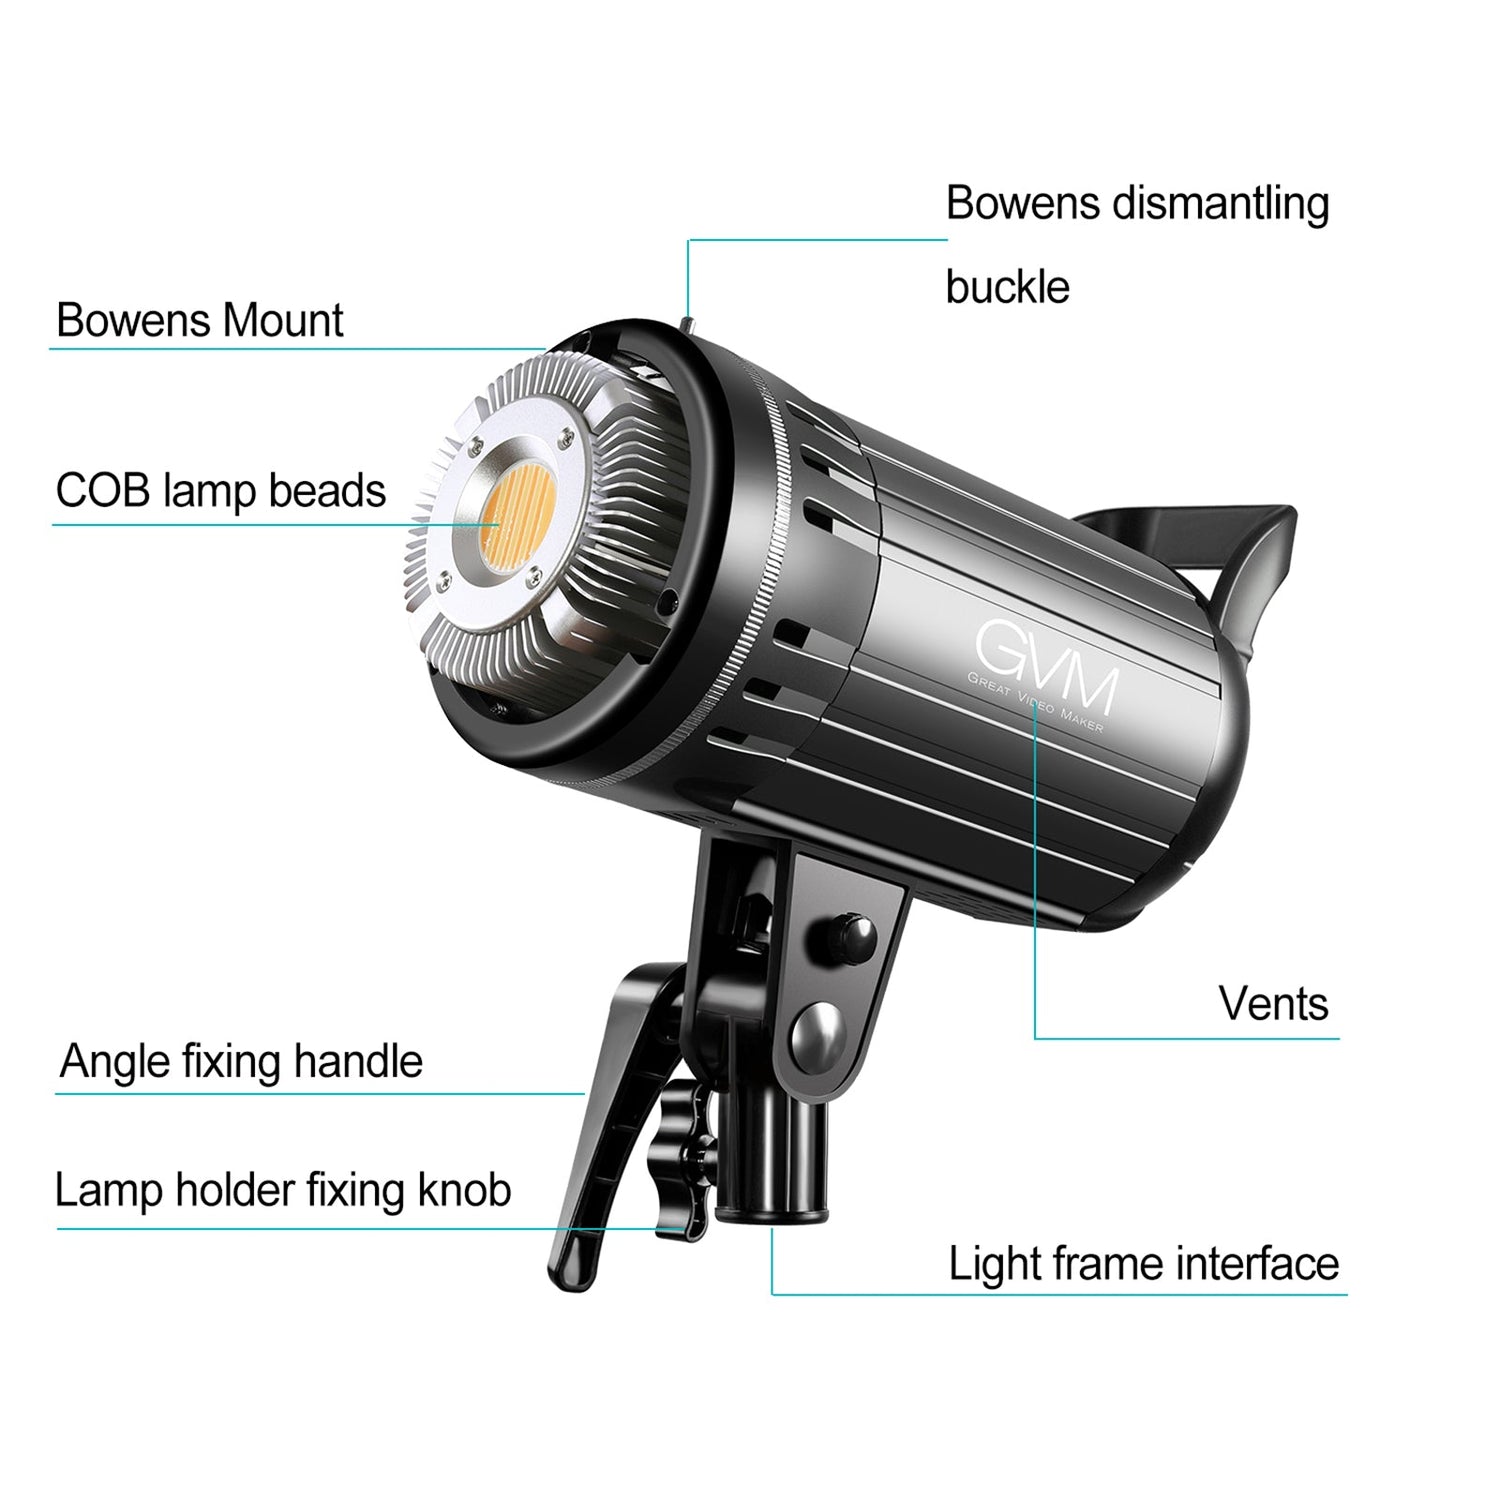 GVM-G100W 90W High Power LED Spotlight Bi-Color Studio Lighting Kit with Lantern Softbox - GVMLED